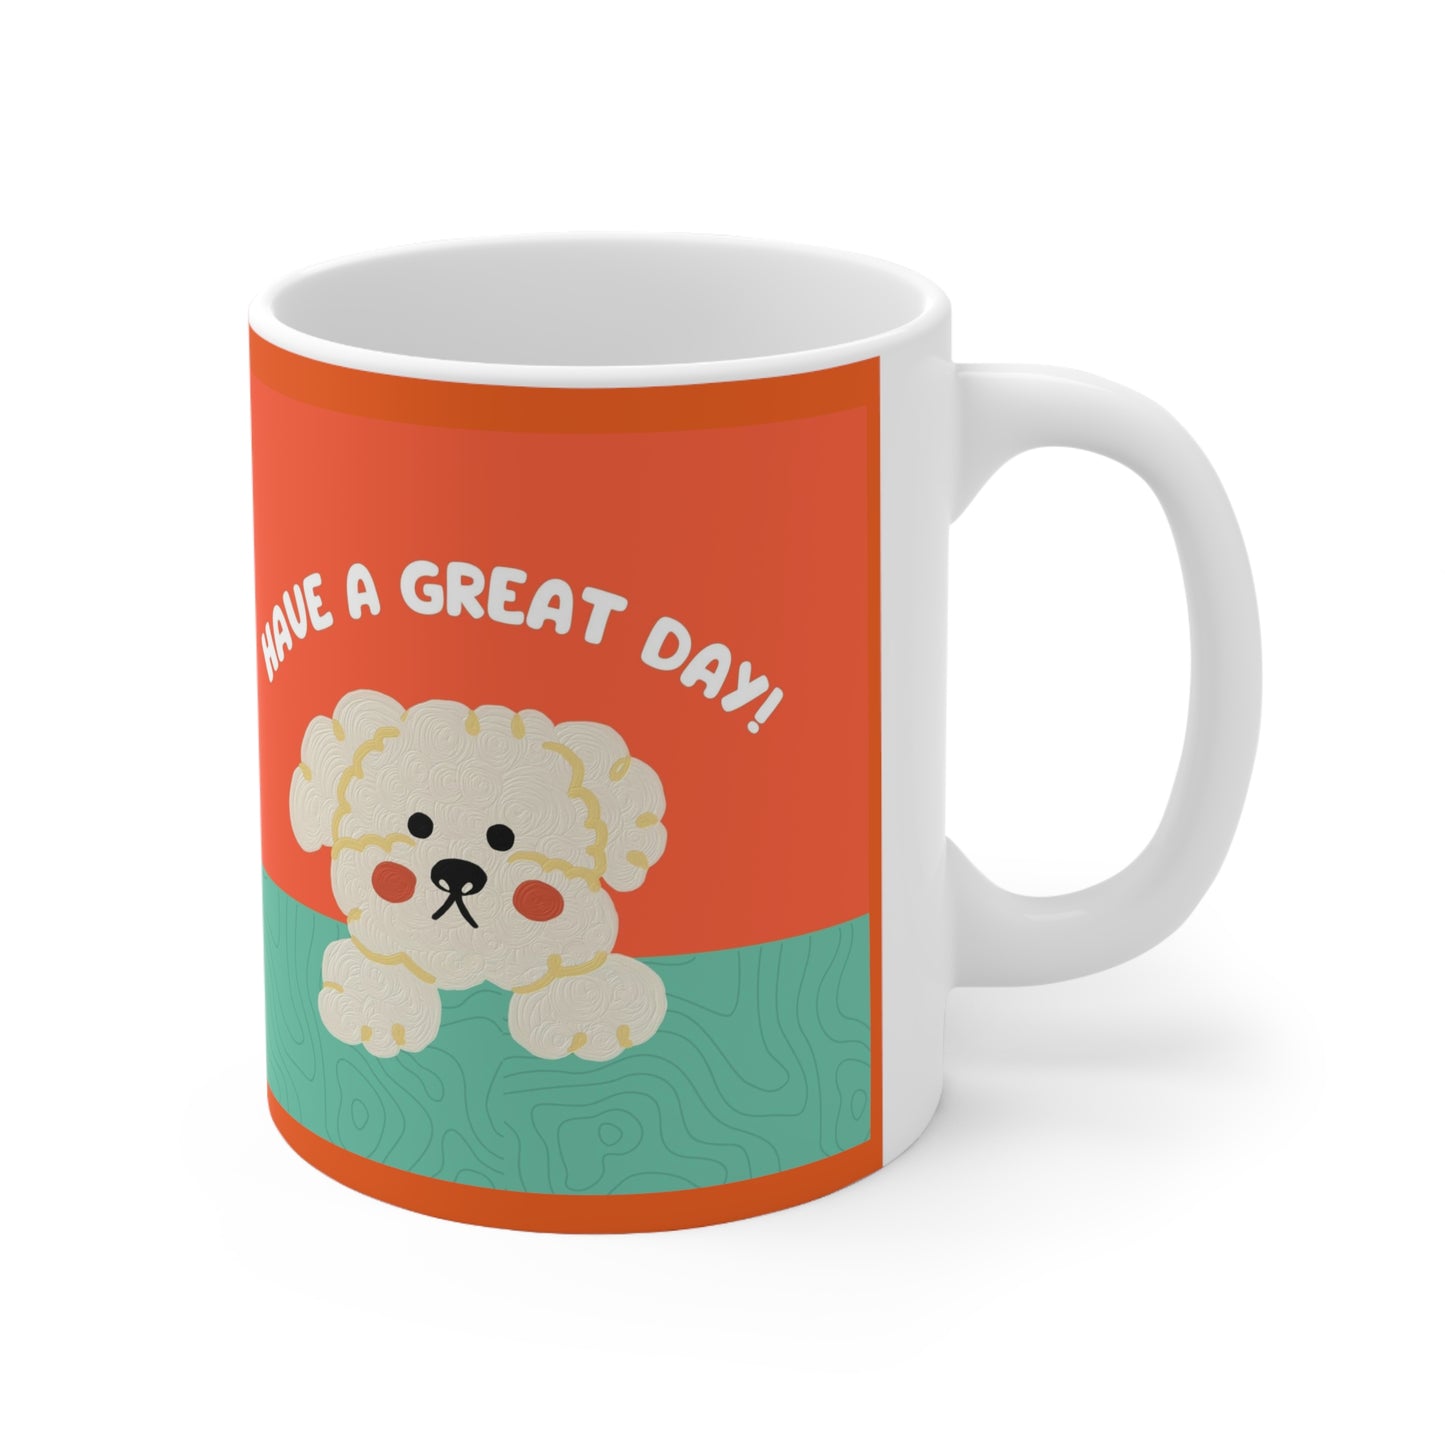 Have a Great Day Ceramic Mug 11oz*